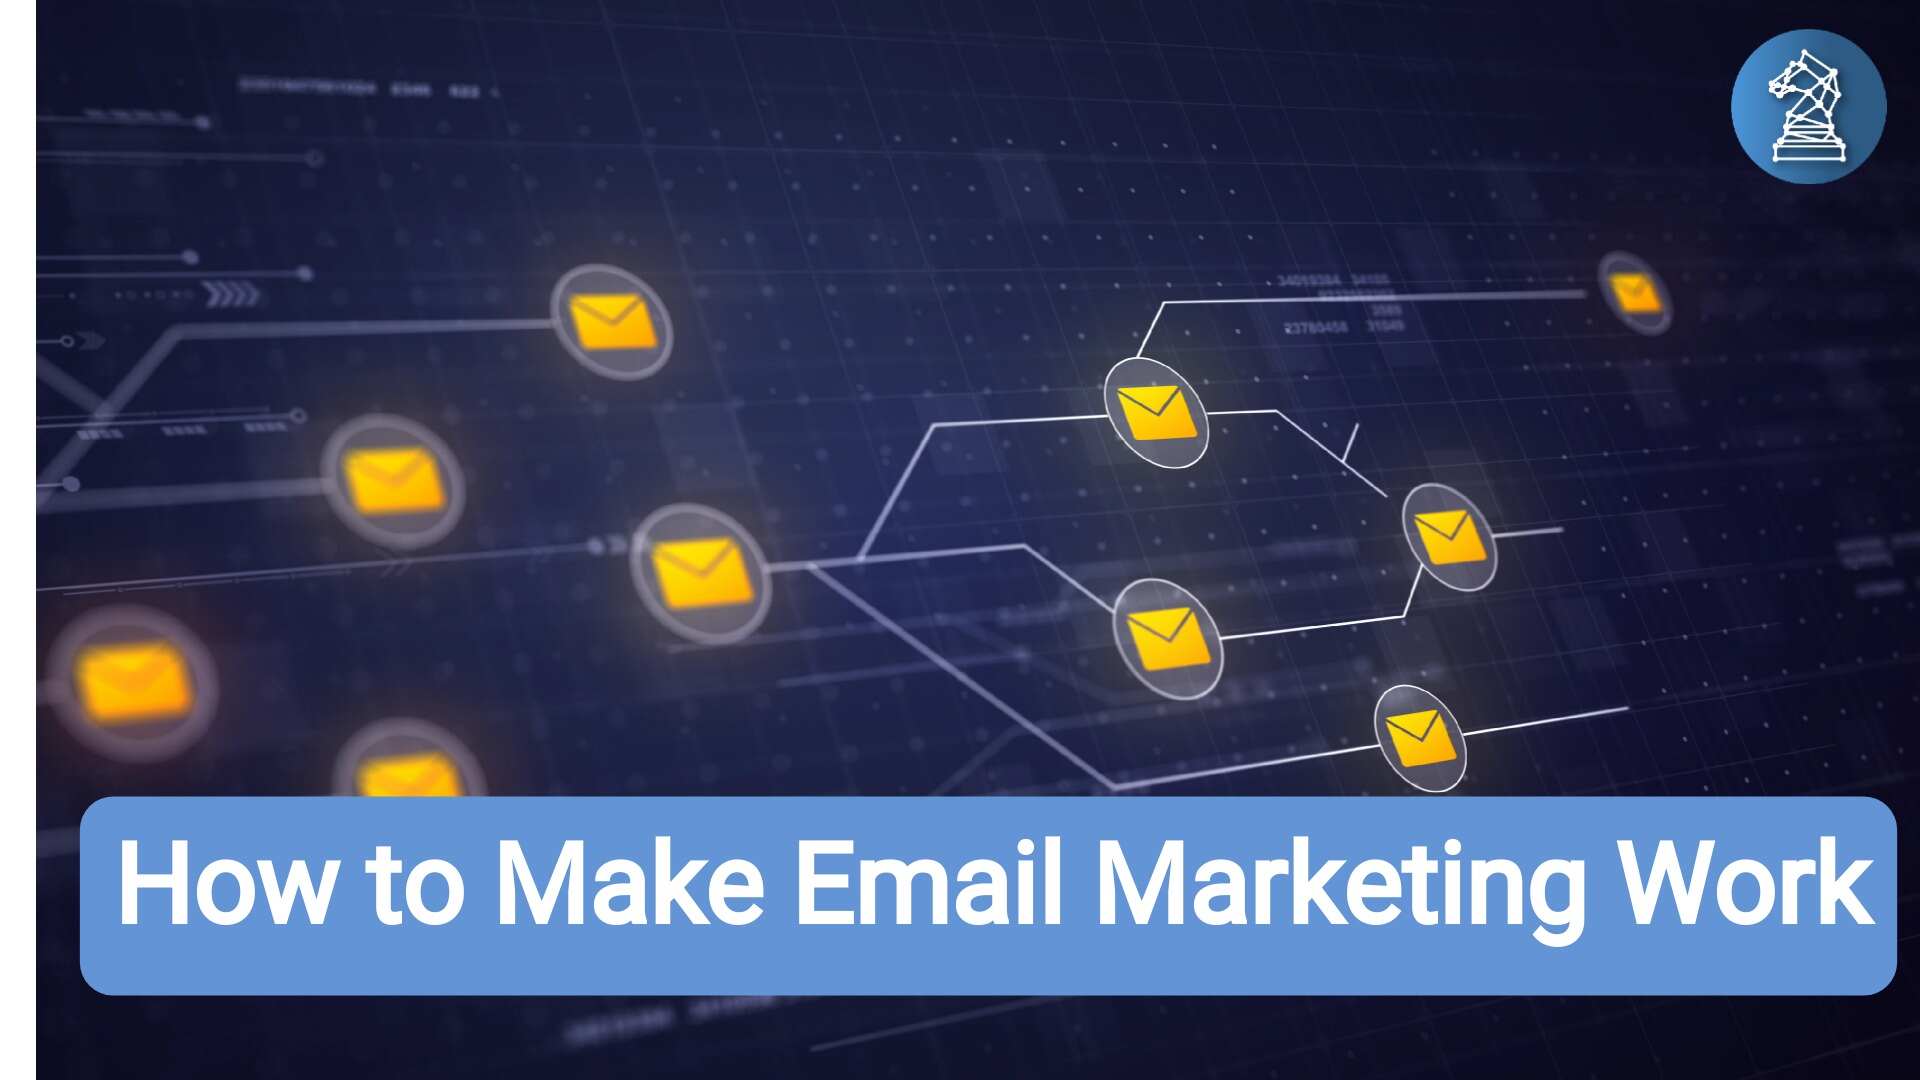 Email Marketing work